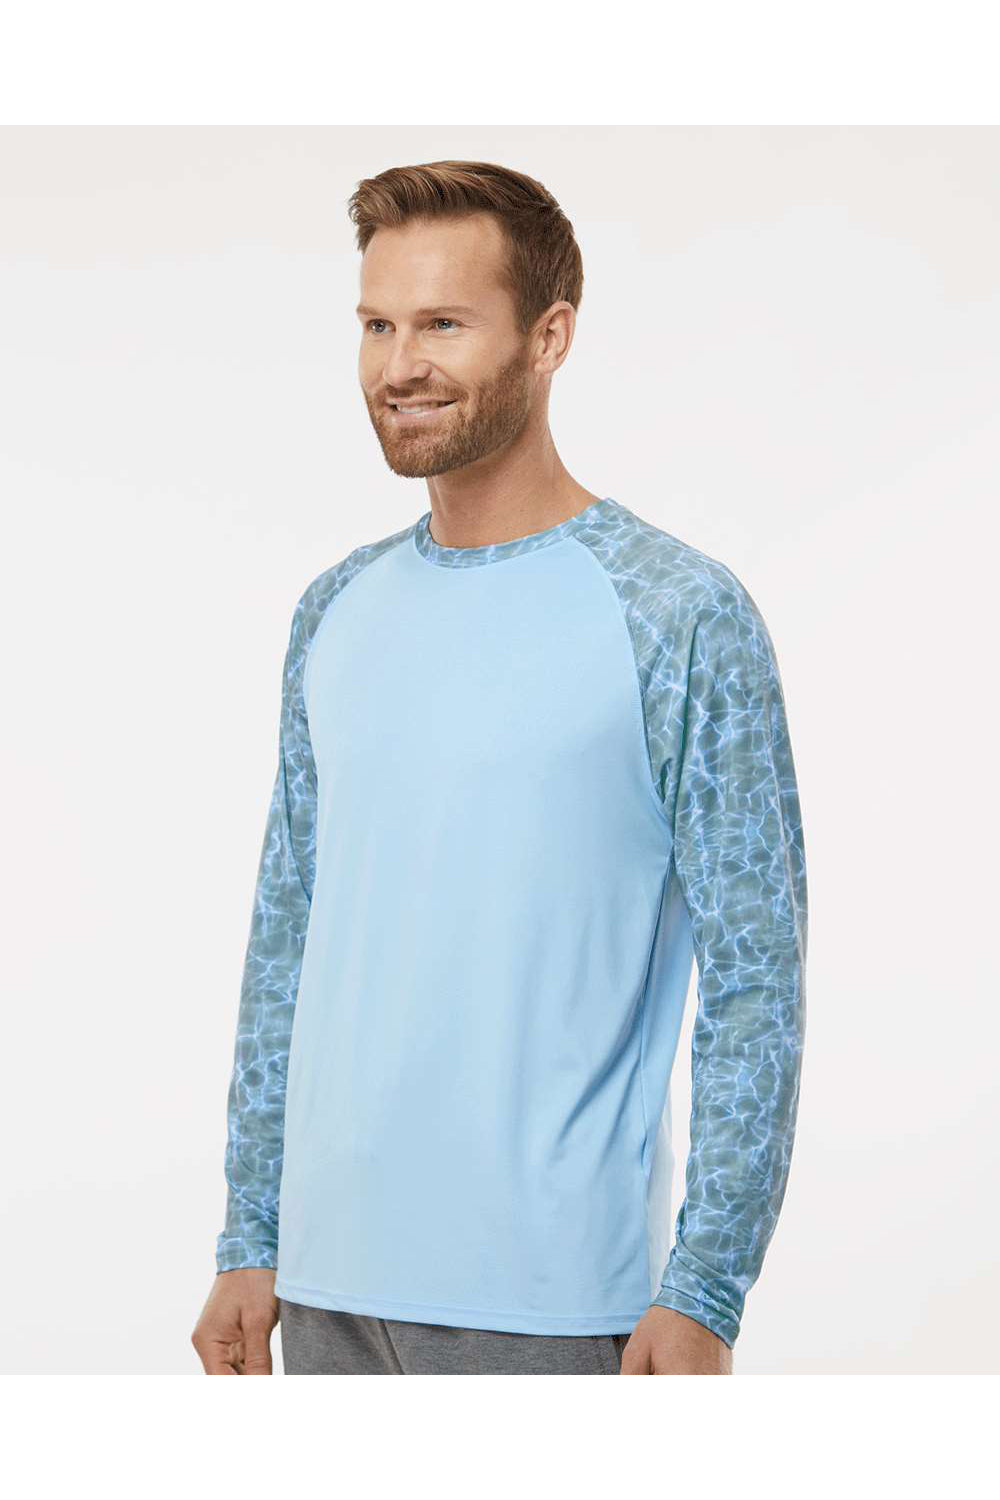 Paragon 231 Mens Panama Colorblocked Long Sleeve Crewneck T-Shirt Grey Mist Water Model Side